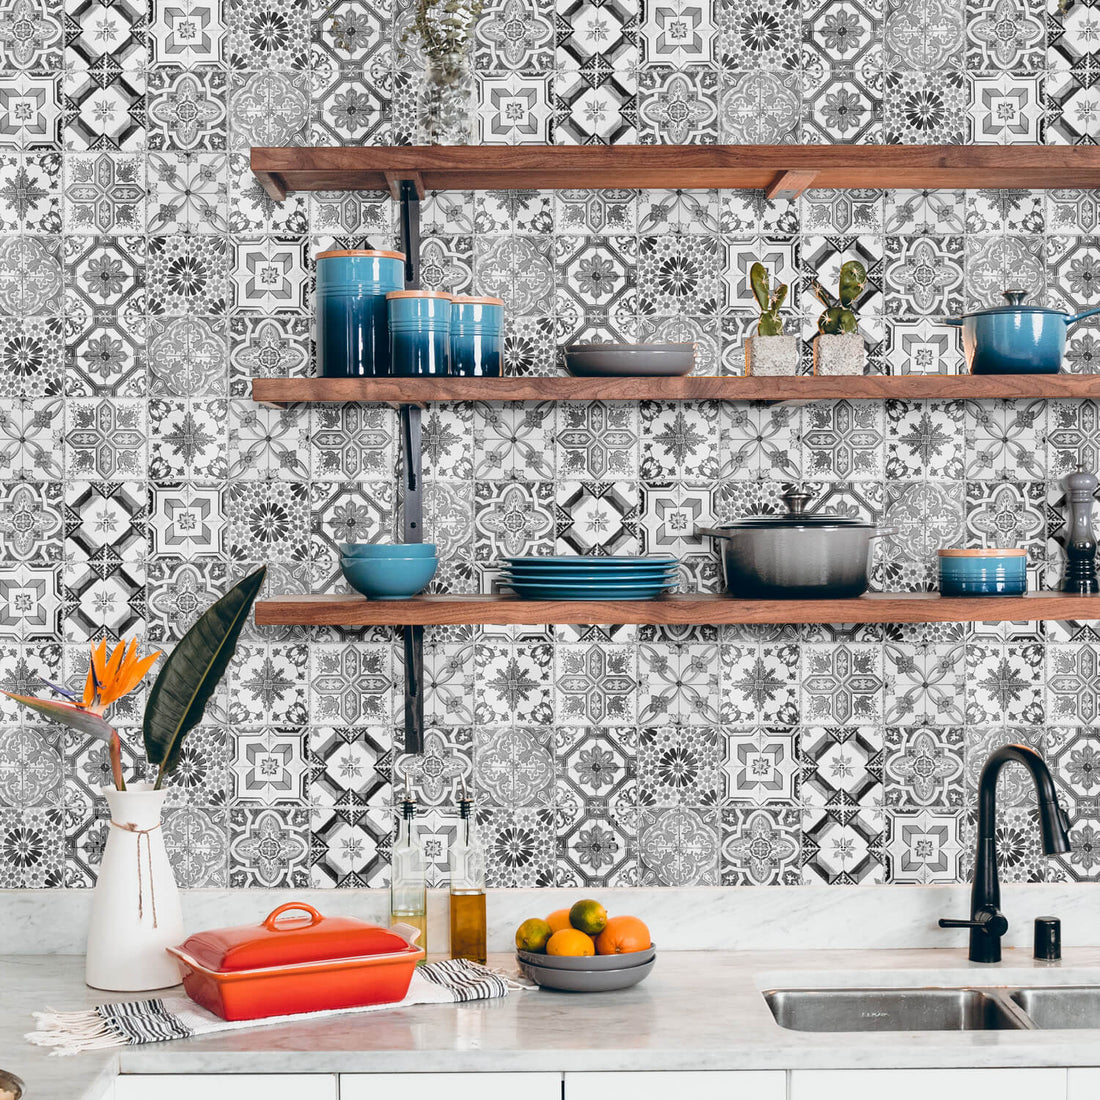 grey lisbon tiles inspired wallpaper as kitchen backsplash